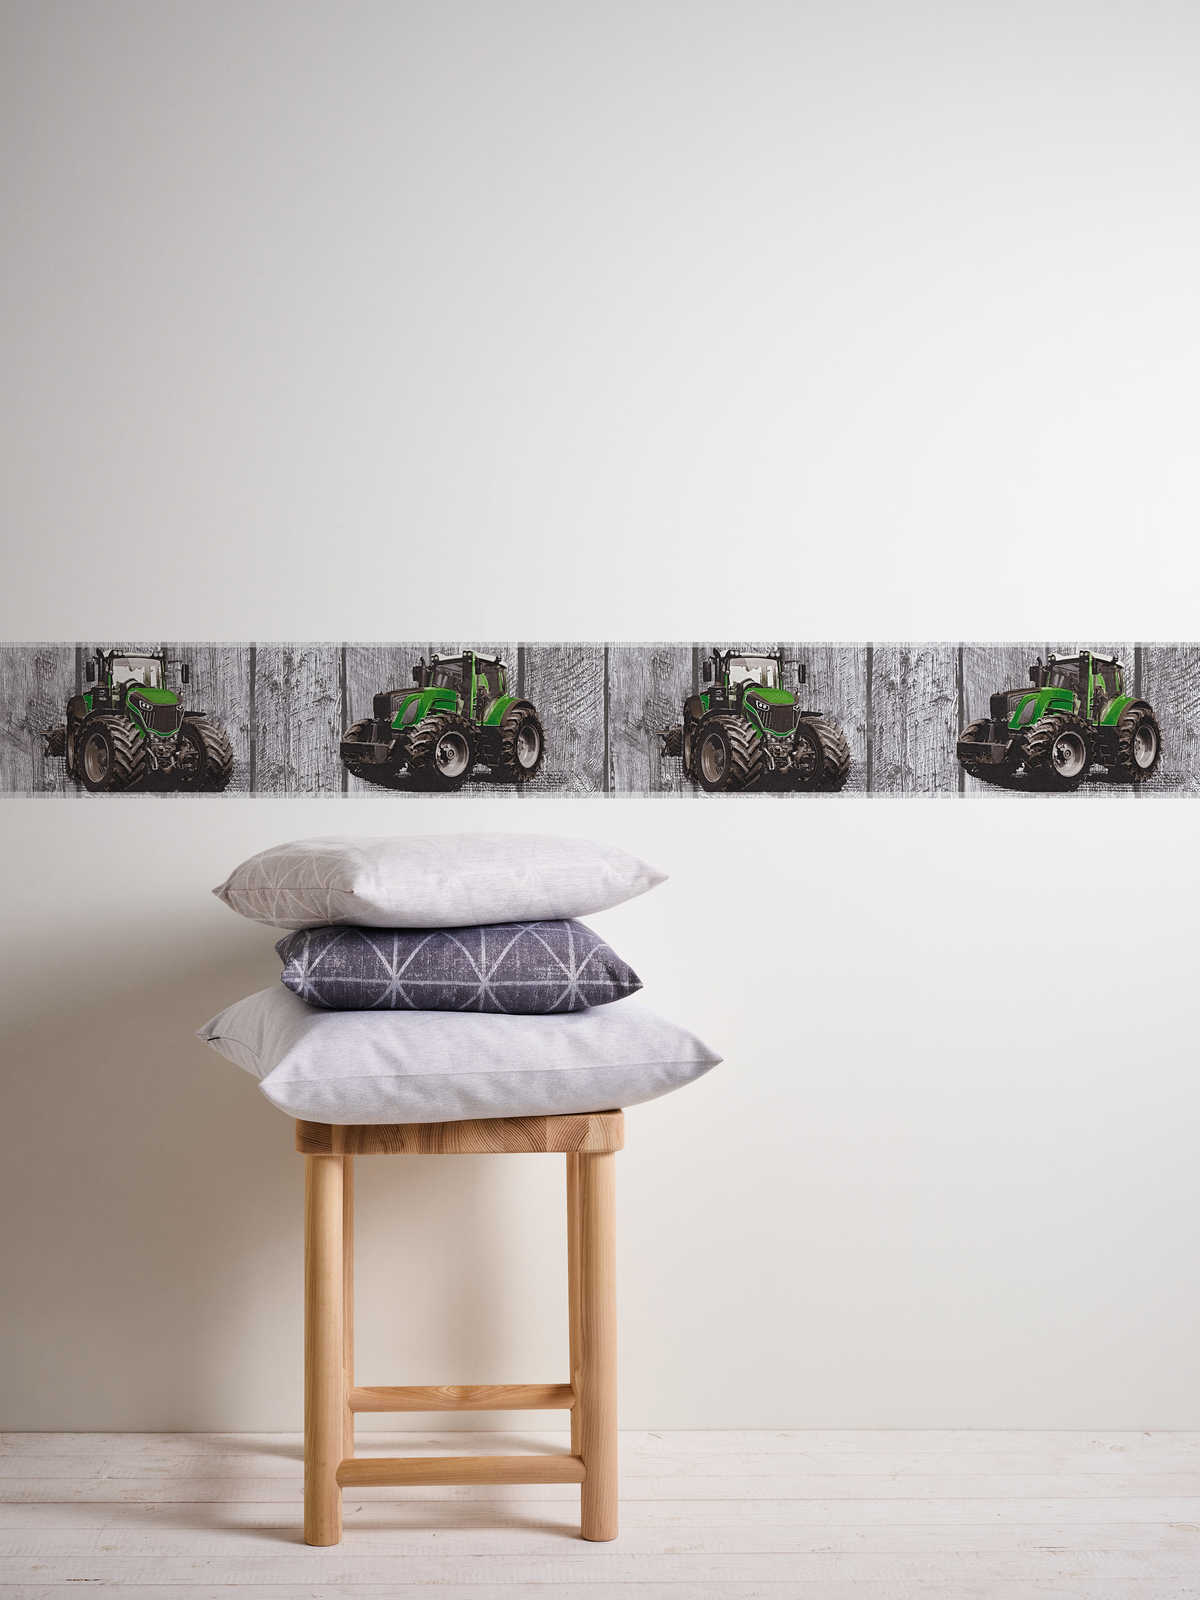             Traktor Tapetenbordüre für Kinderzimmer – Grau, Grün
        